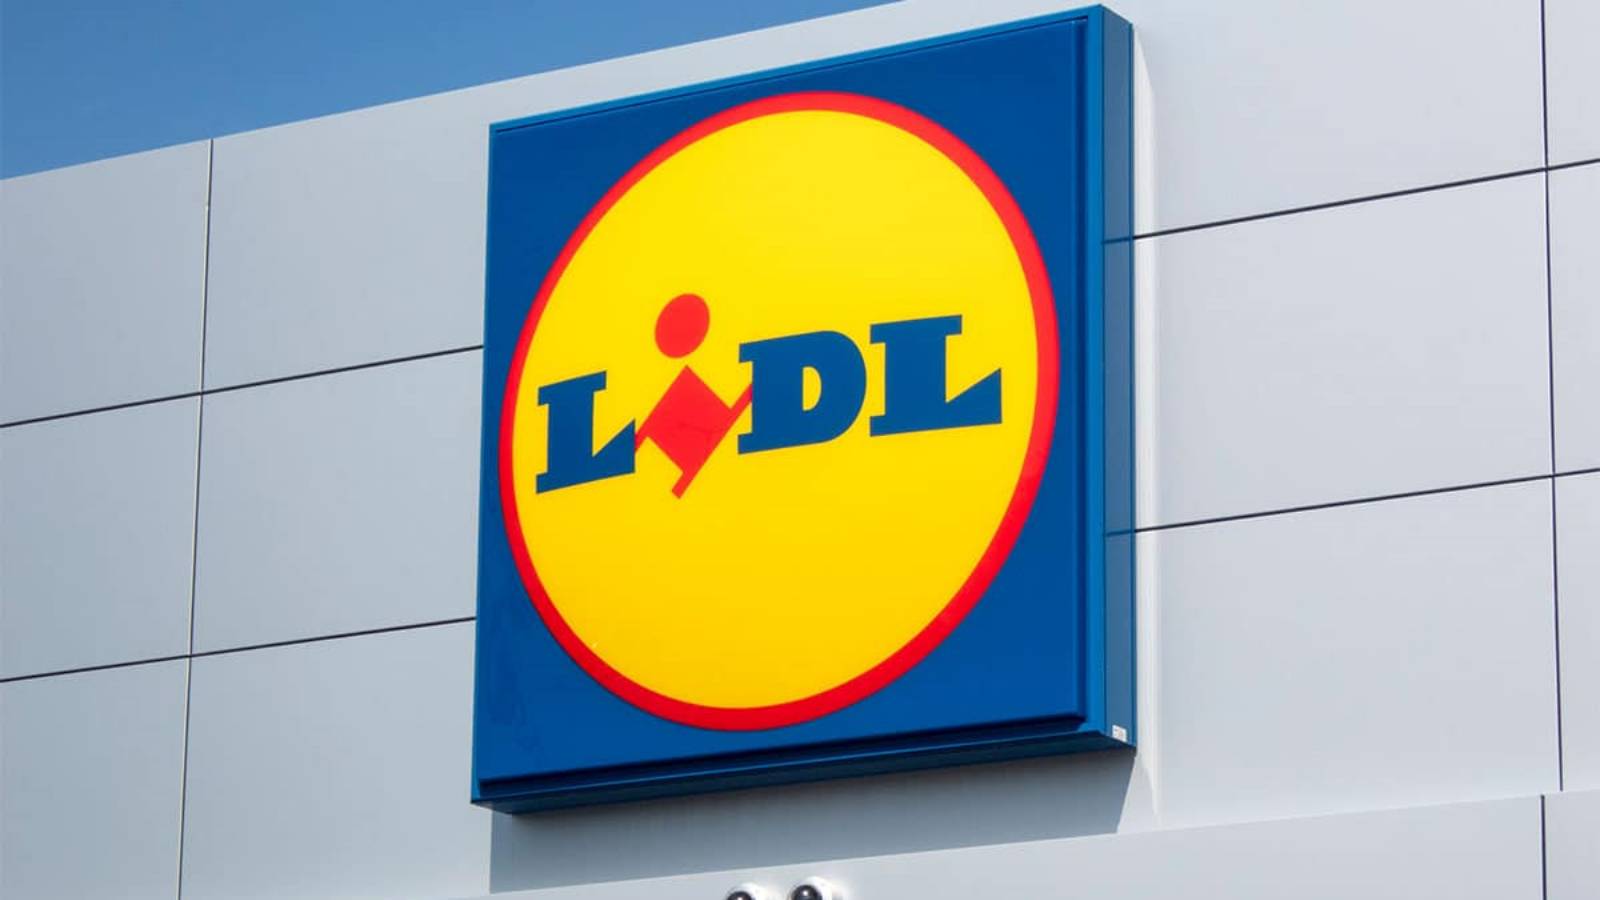 LIDL Romania improvements